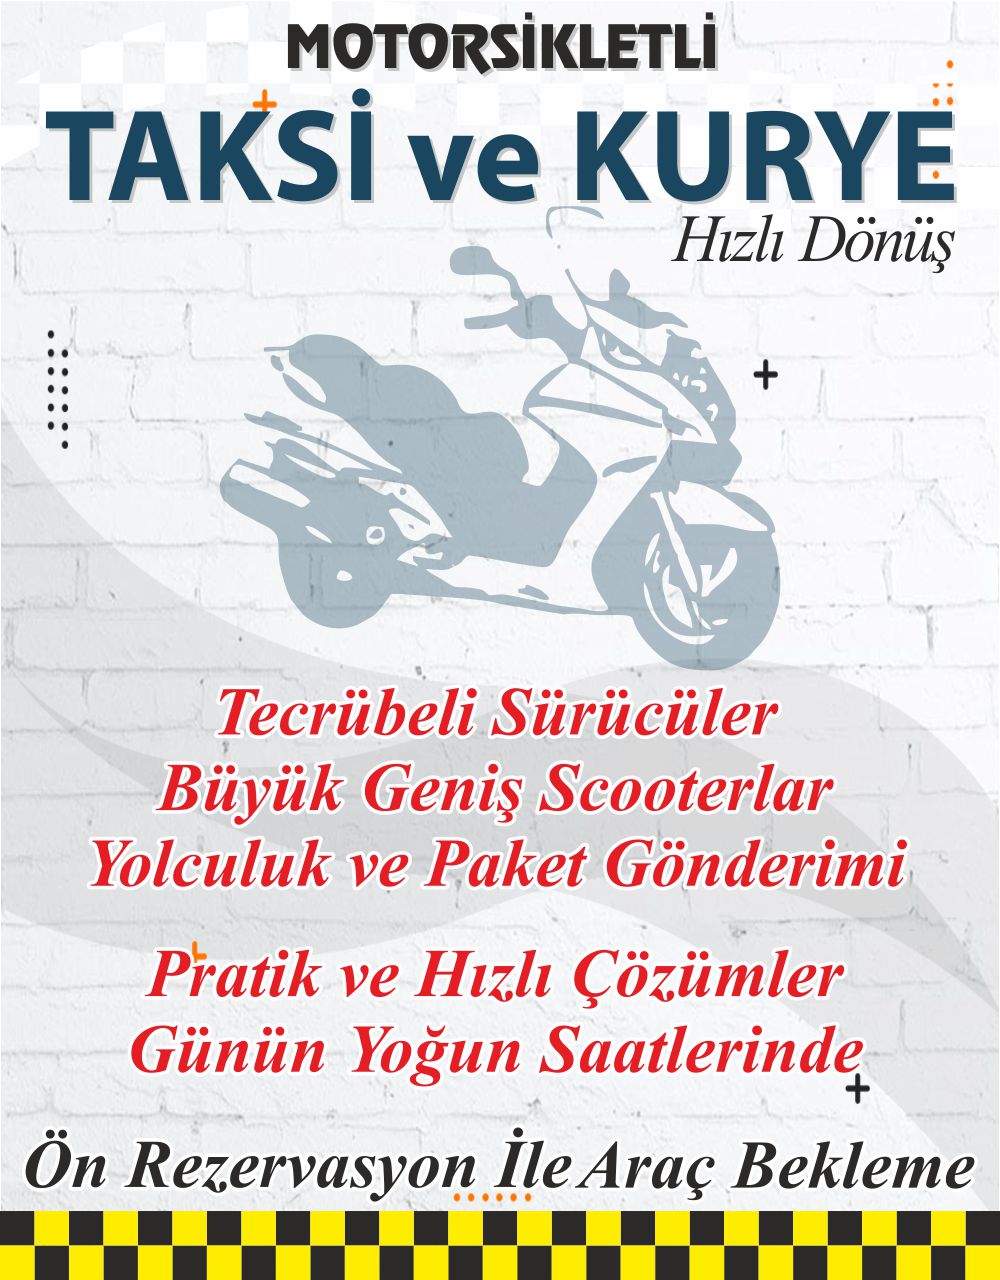 Moto Motosikletli Taksi & Kurye